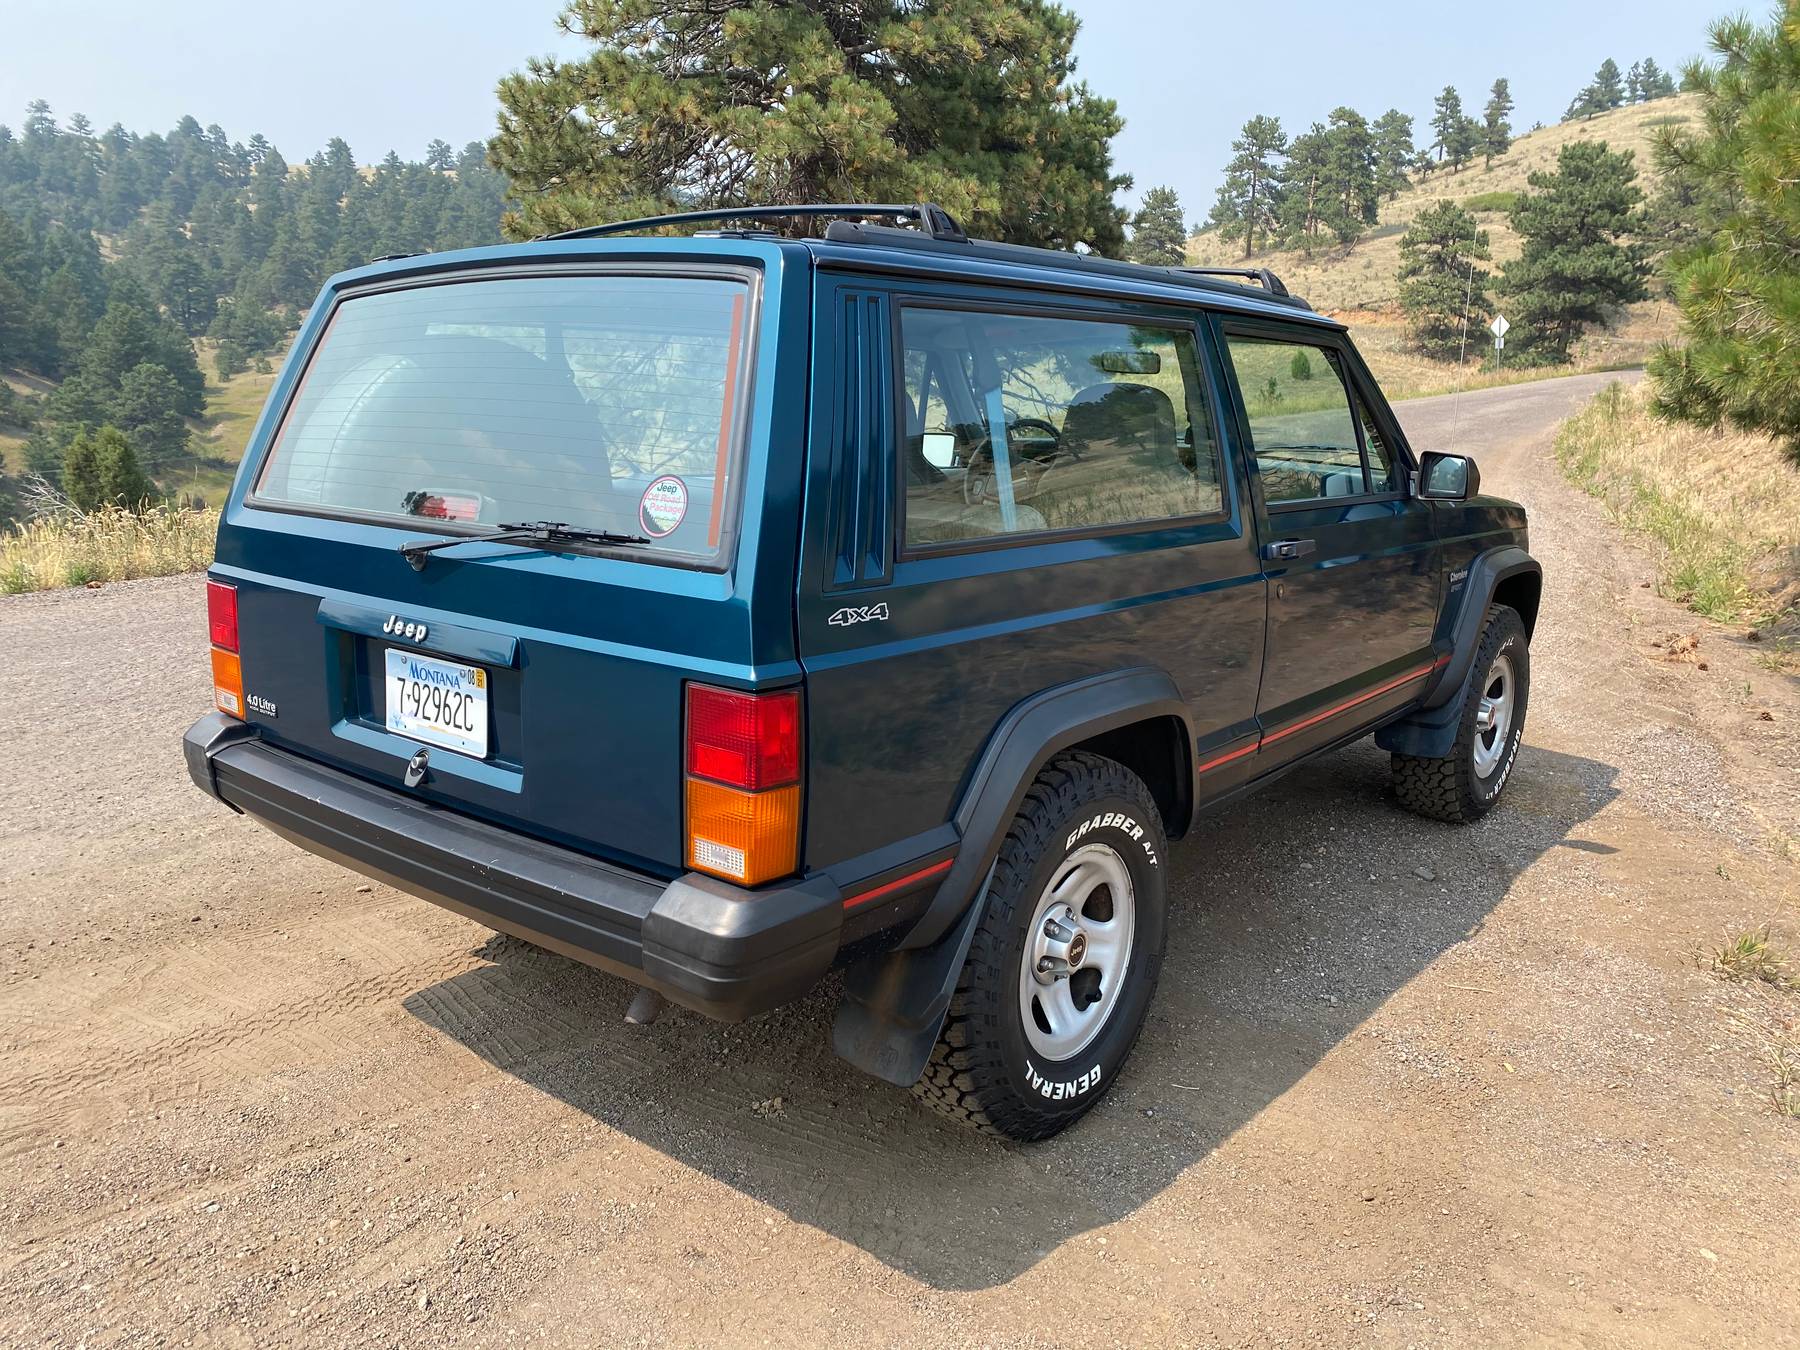 1995 Jeep Cherokee Sport is a Stylish, Boxy, German Import